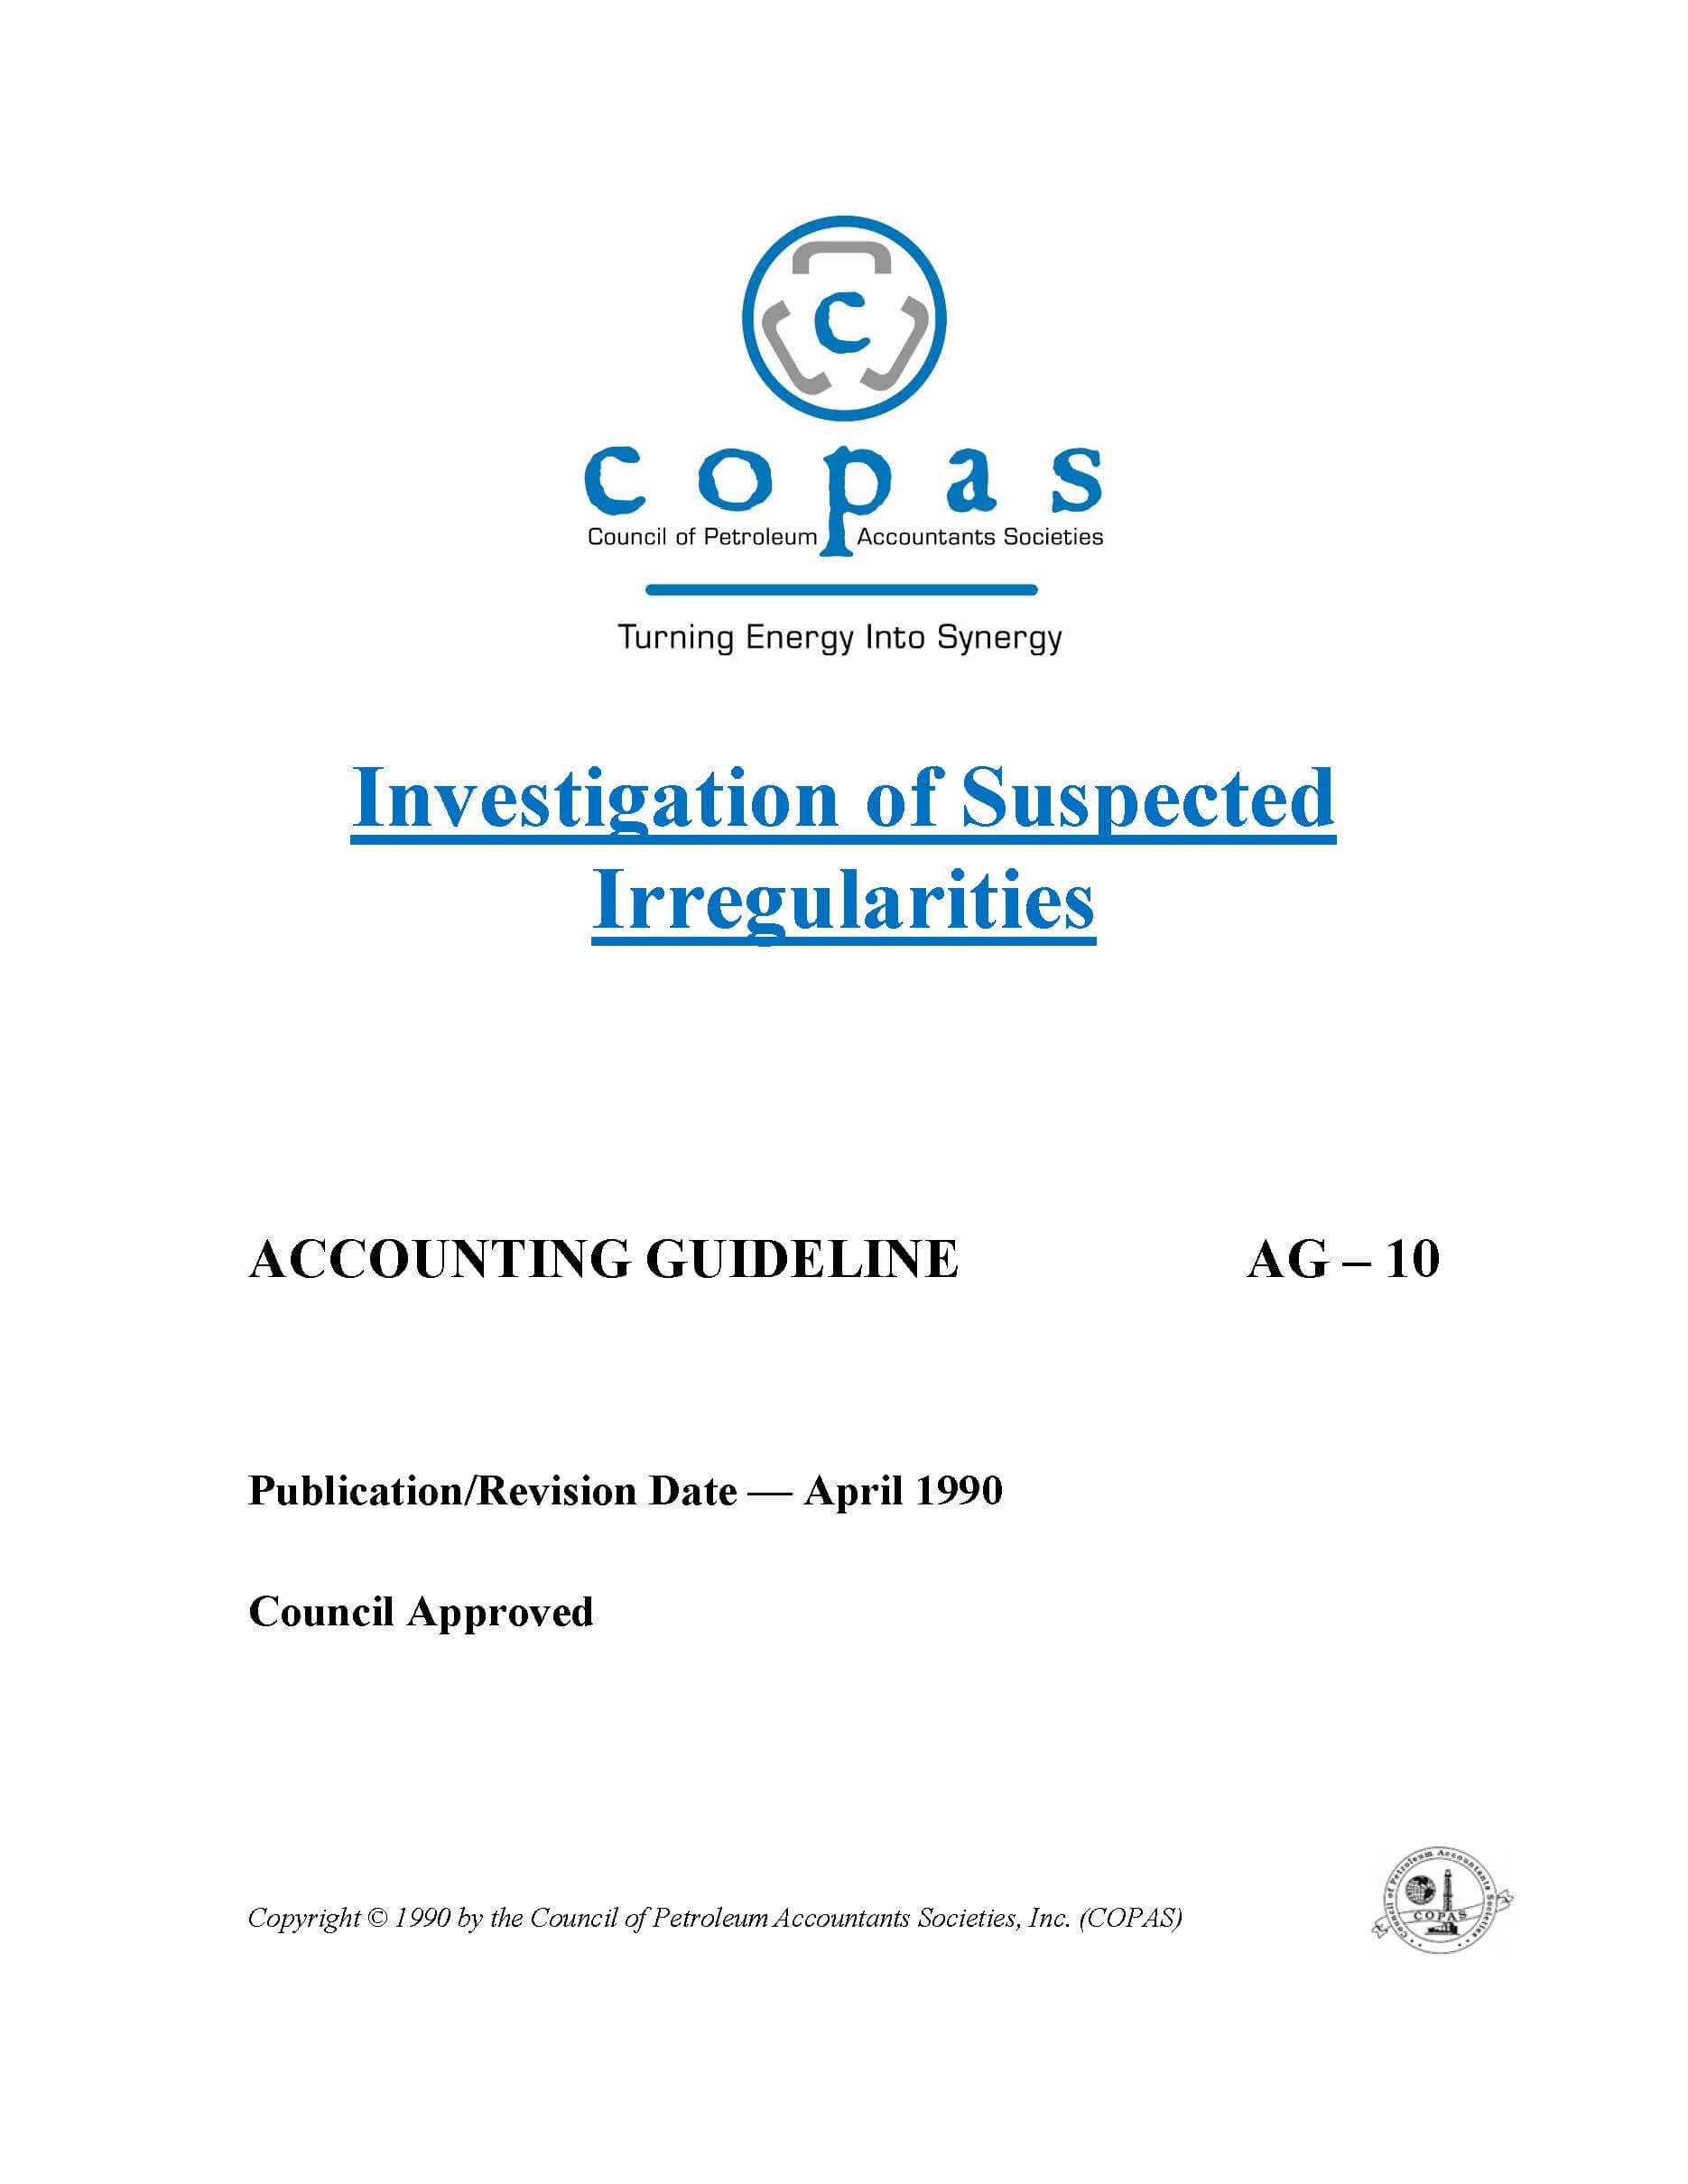 AG-10 Investigations Of Suspected Irregularities